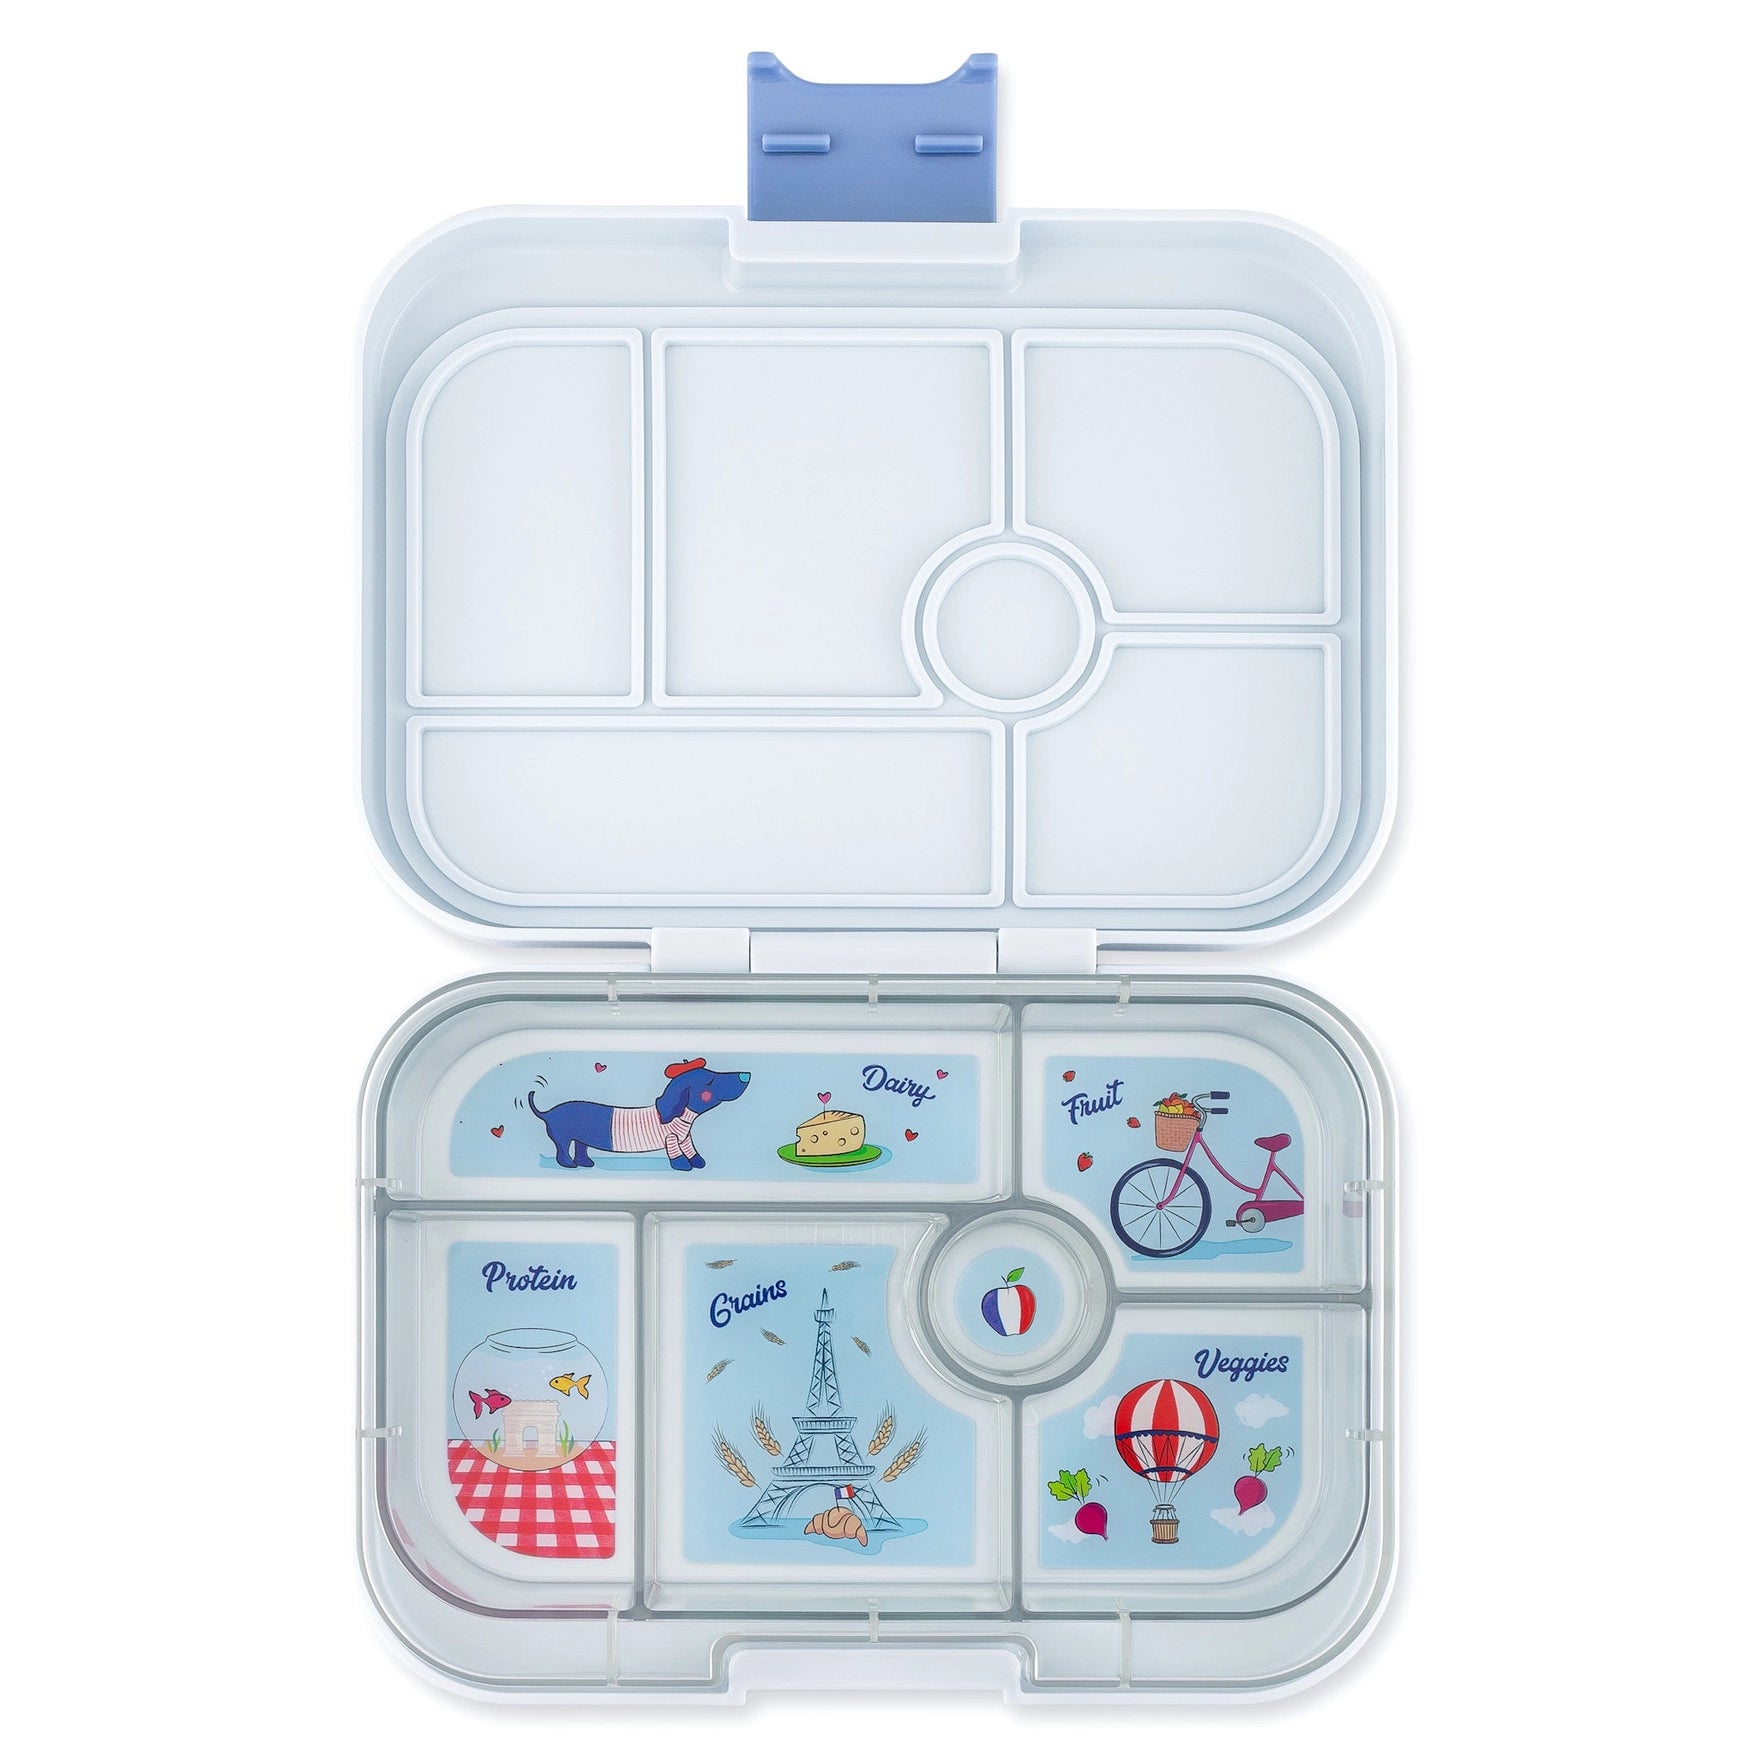 Leakproof Bento Box for Kids - Yumbox Original Surf Blue